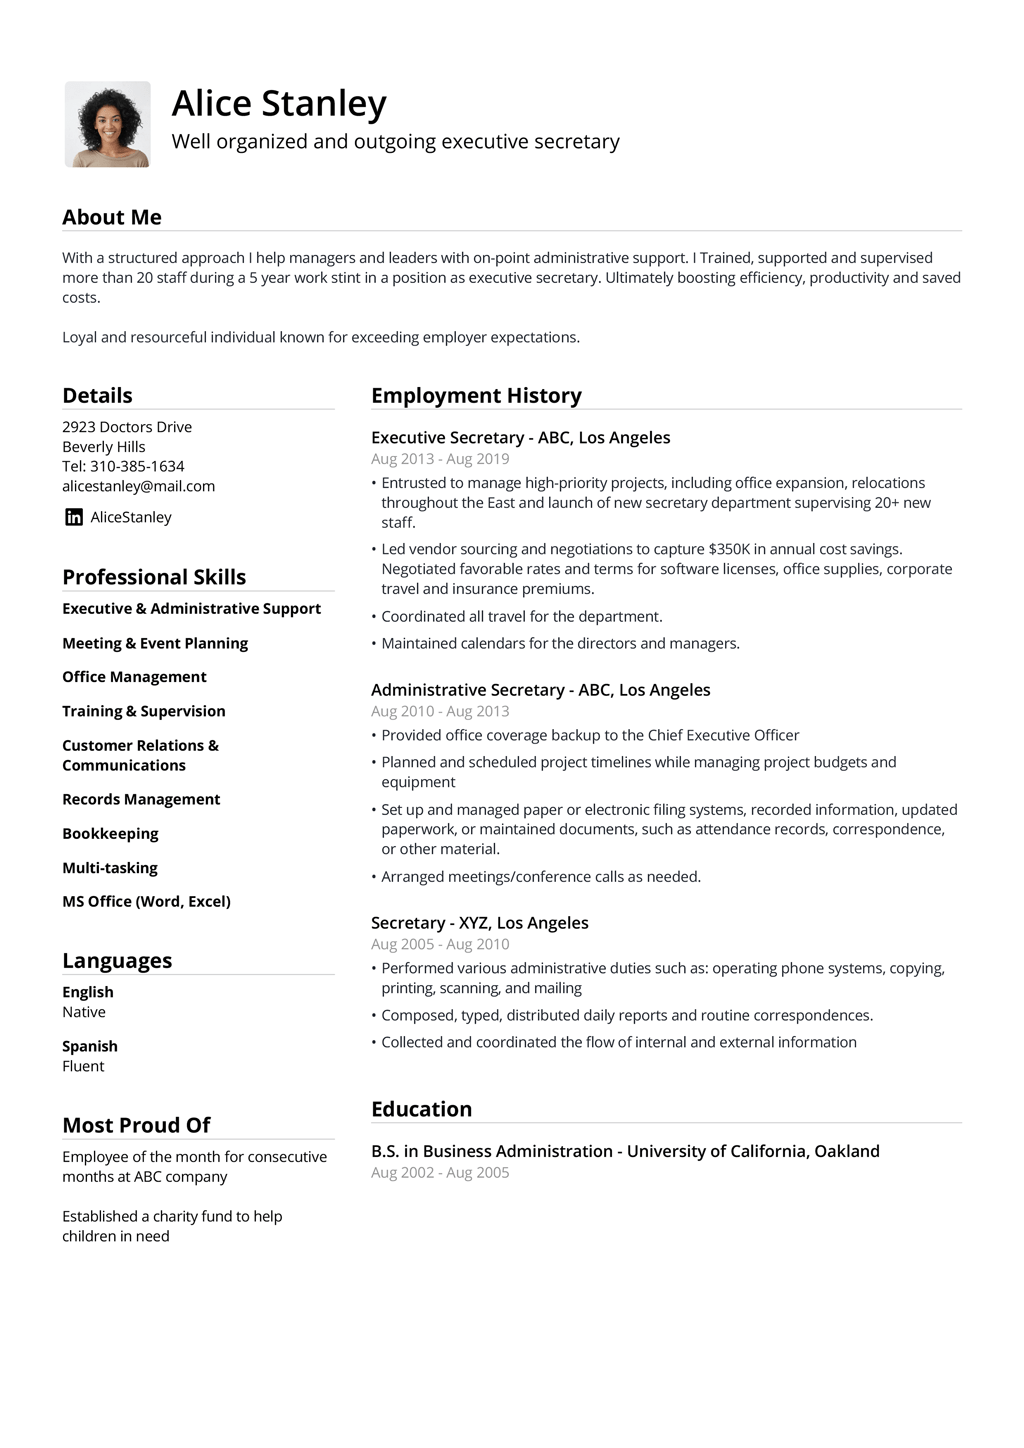 resume format download